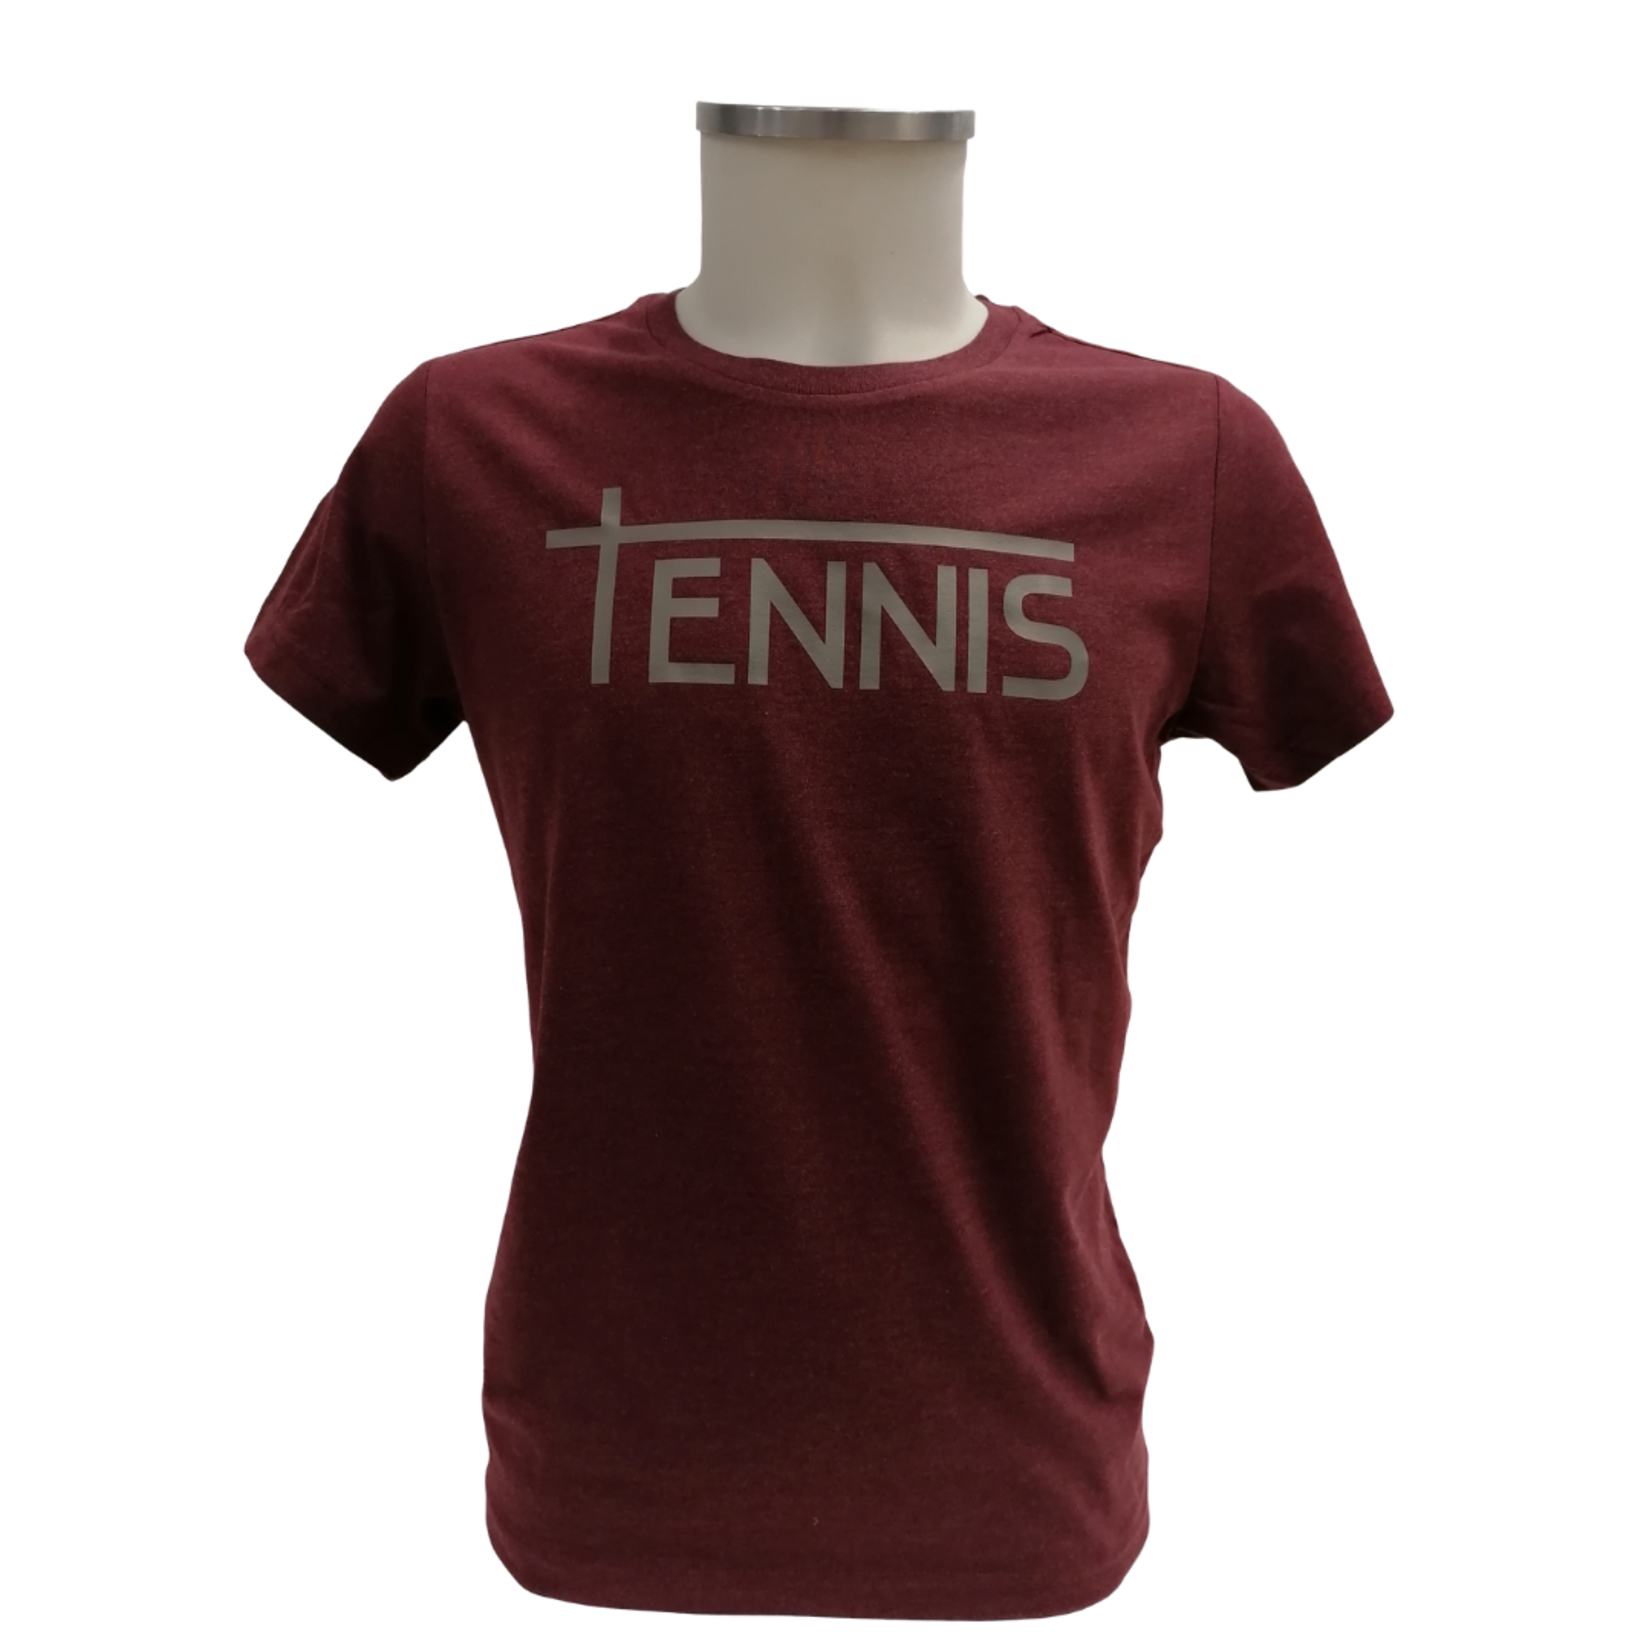 Verloy Heren Organic Cotton Tennis T-shirt